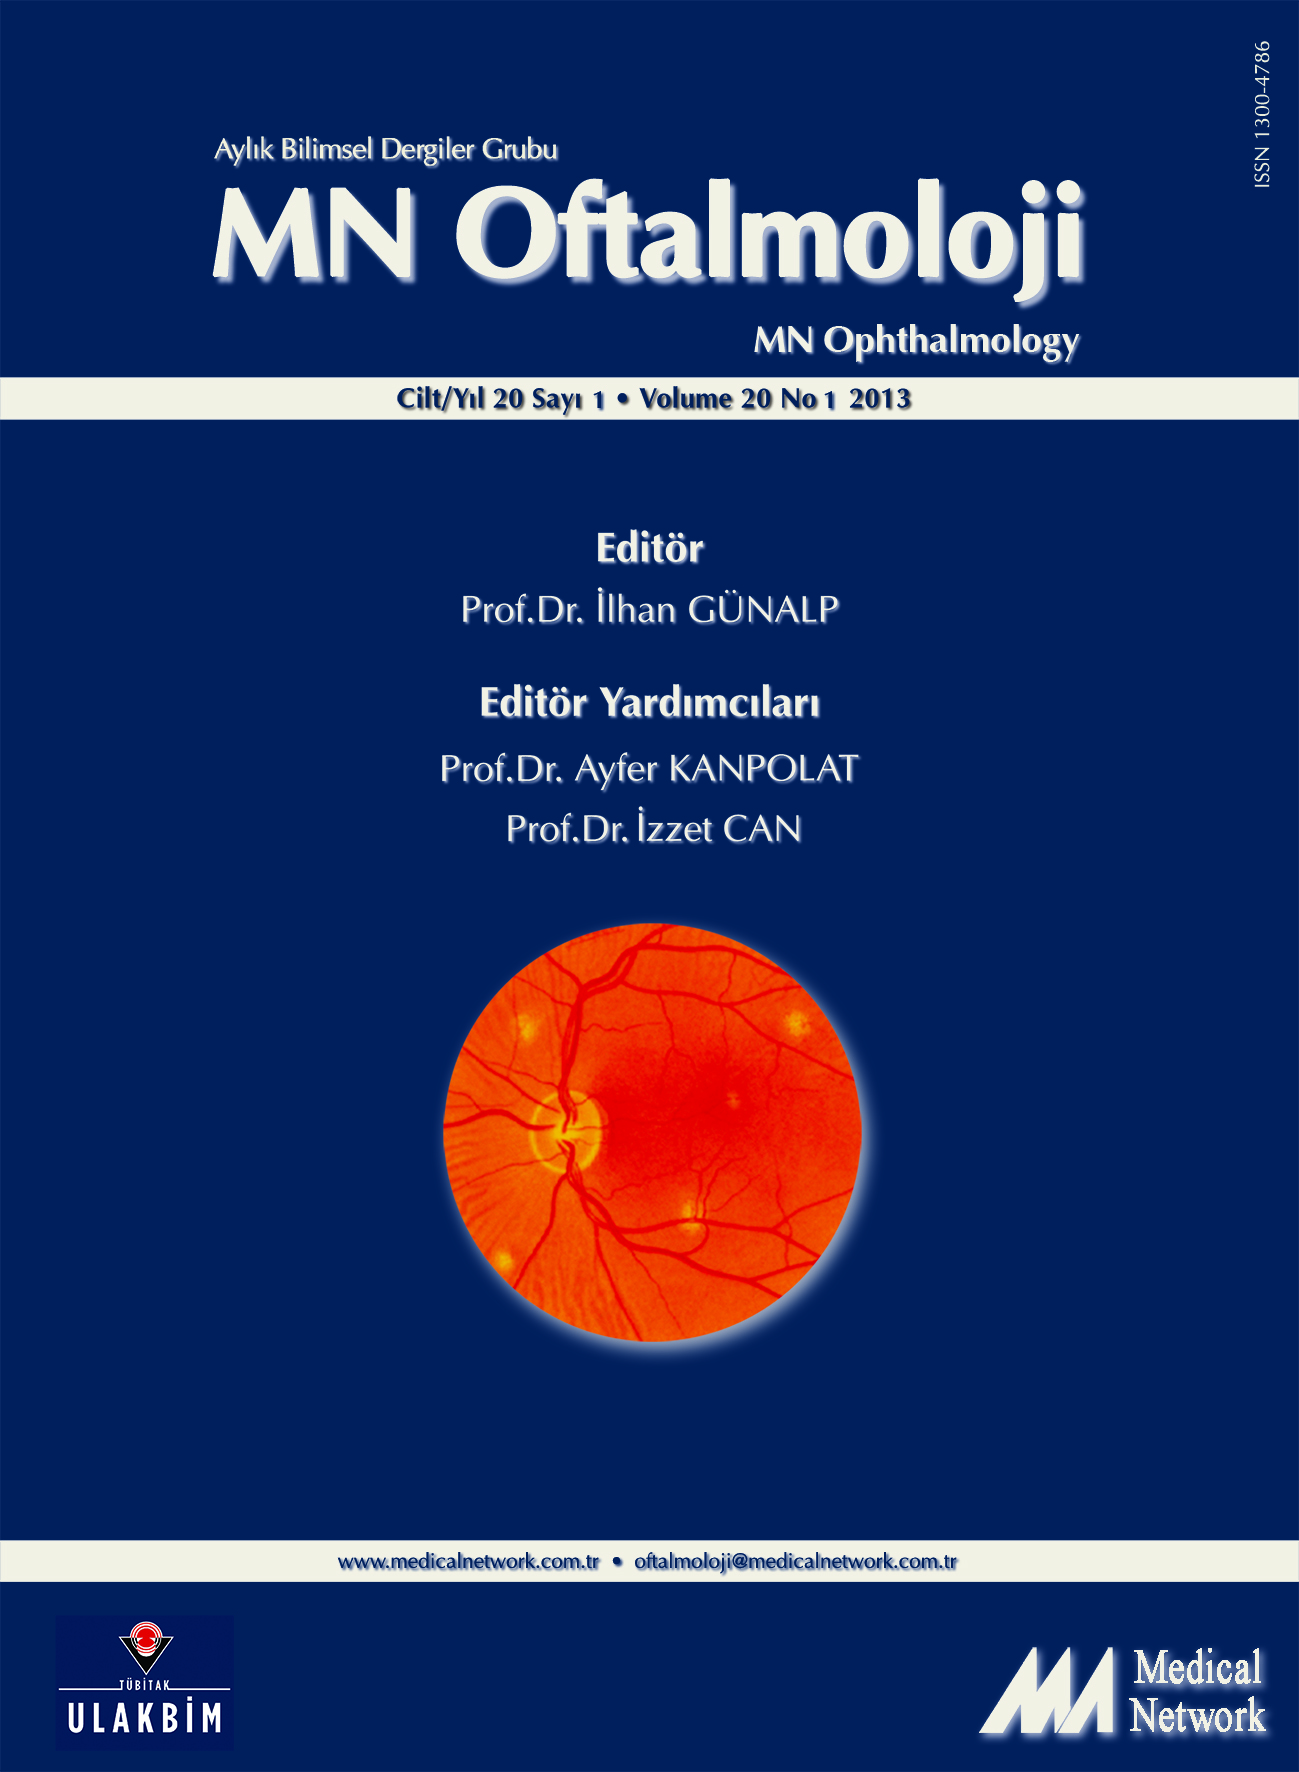 <p>MN Oftalmoloji Cilt: 20 Say: 1 2013 (MN Ophthalmology Volume: 20 No 1 2013)</p>